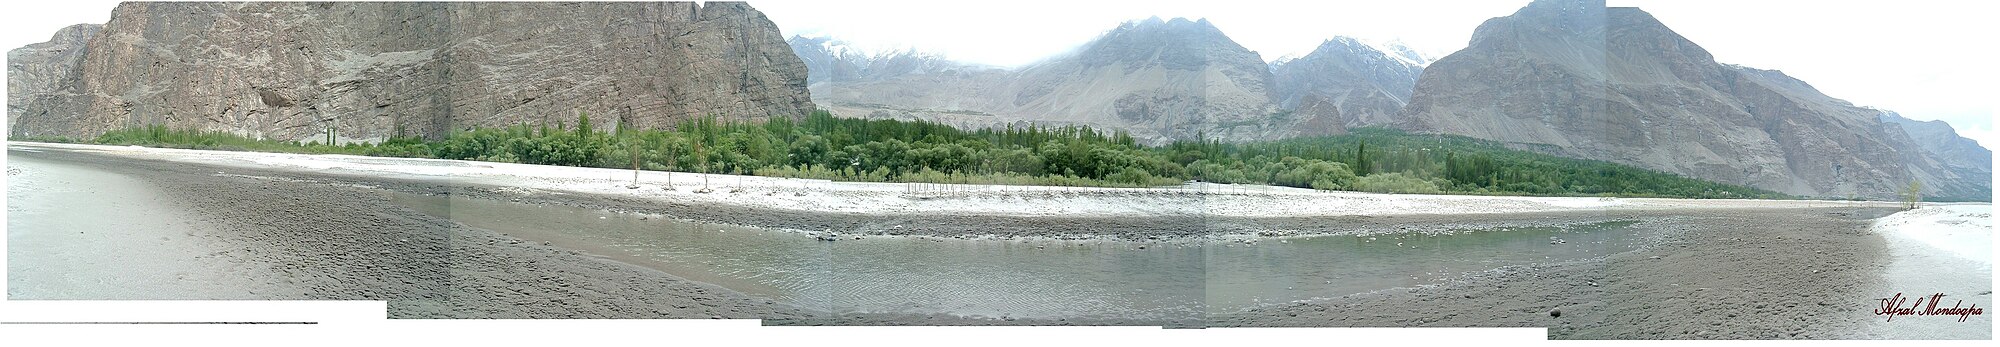 دریائے شیوک تو‏ں خپلو دا منظر.